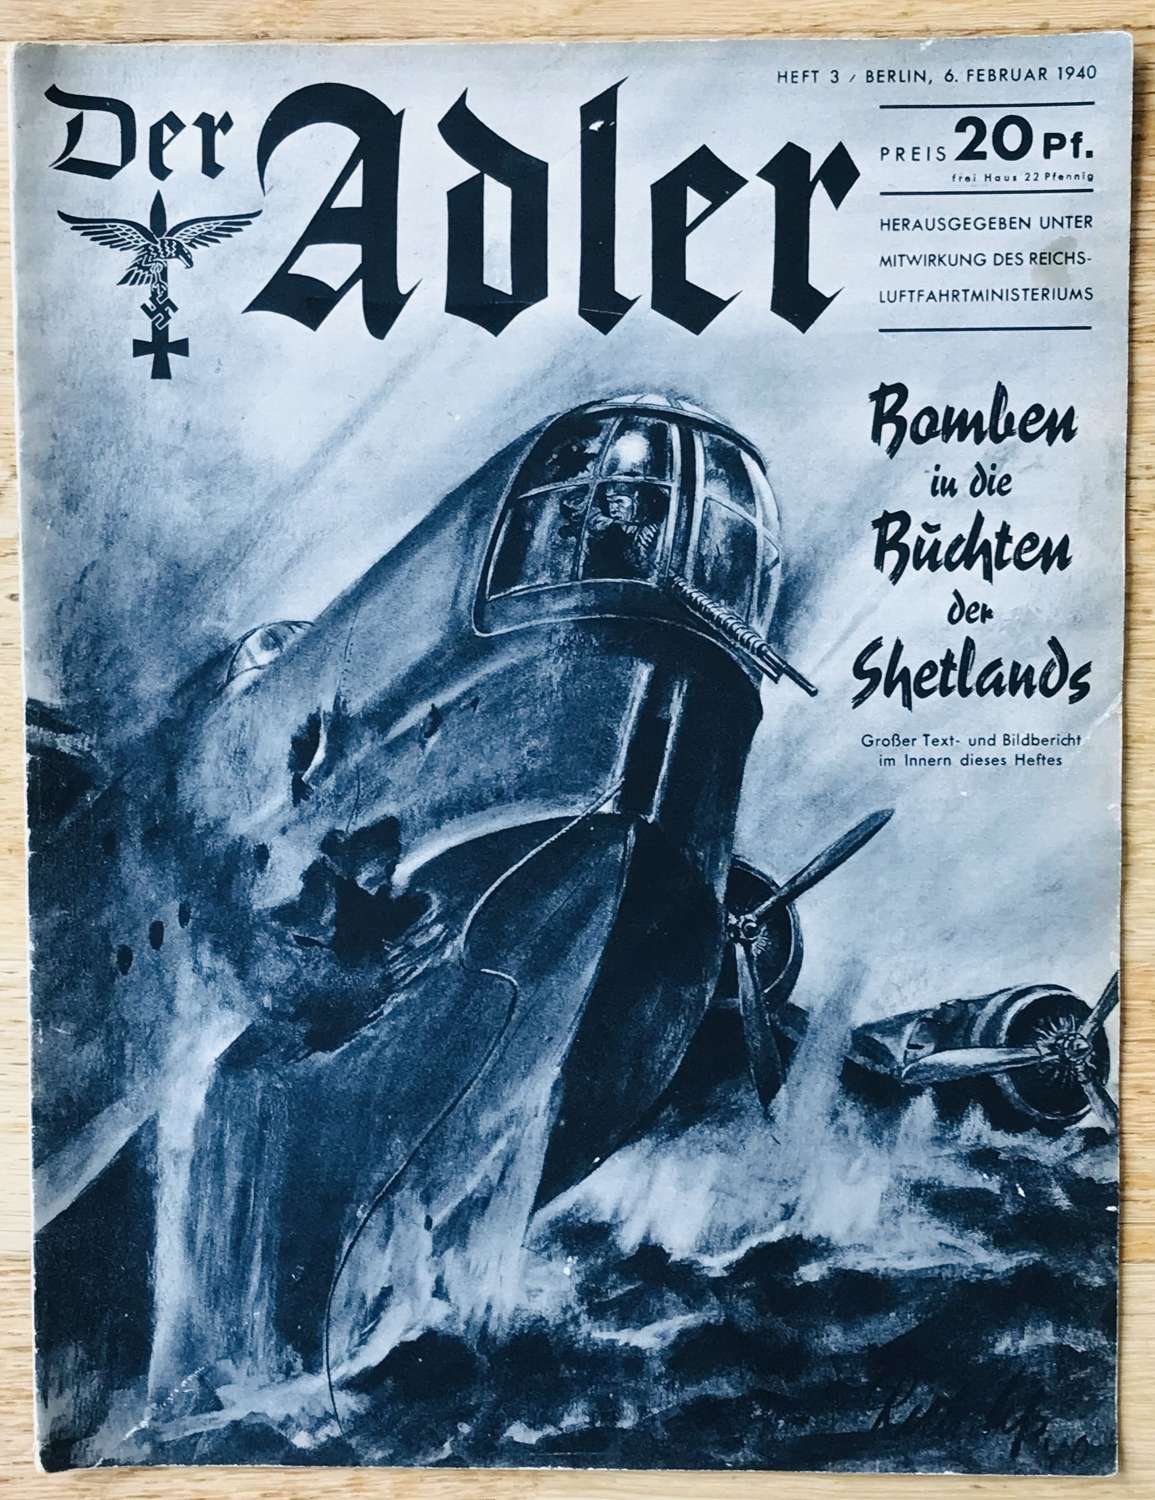 Luftwaffe Alder magazine dated February 1940